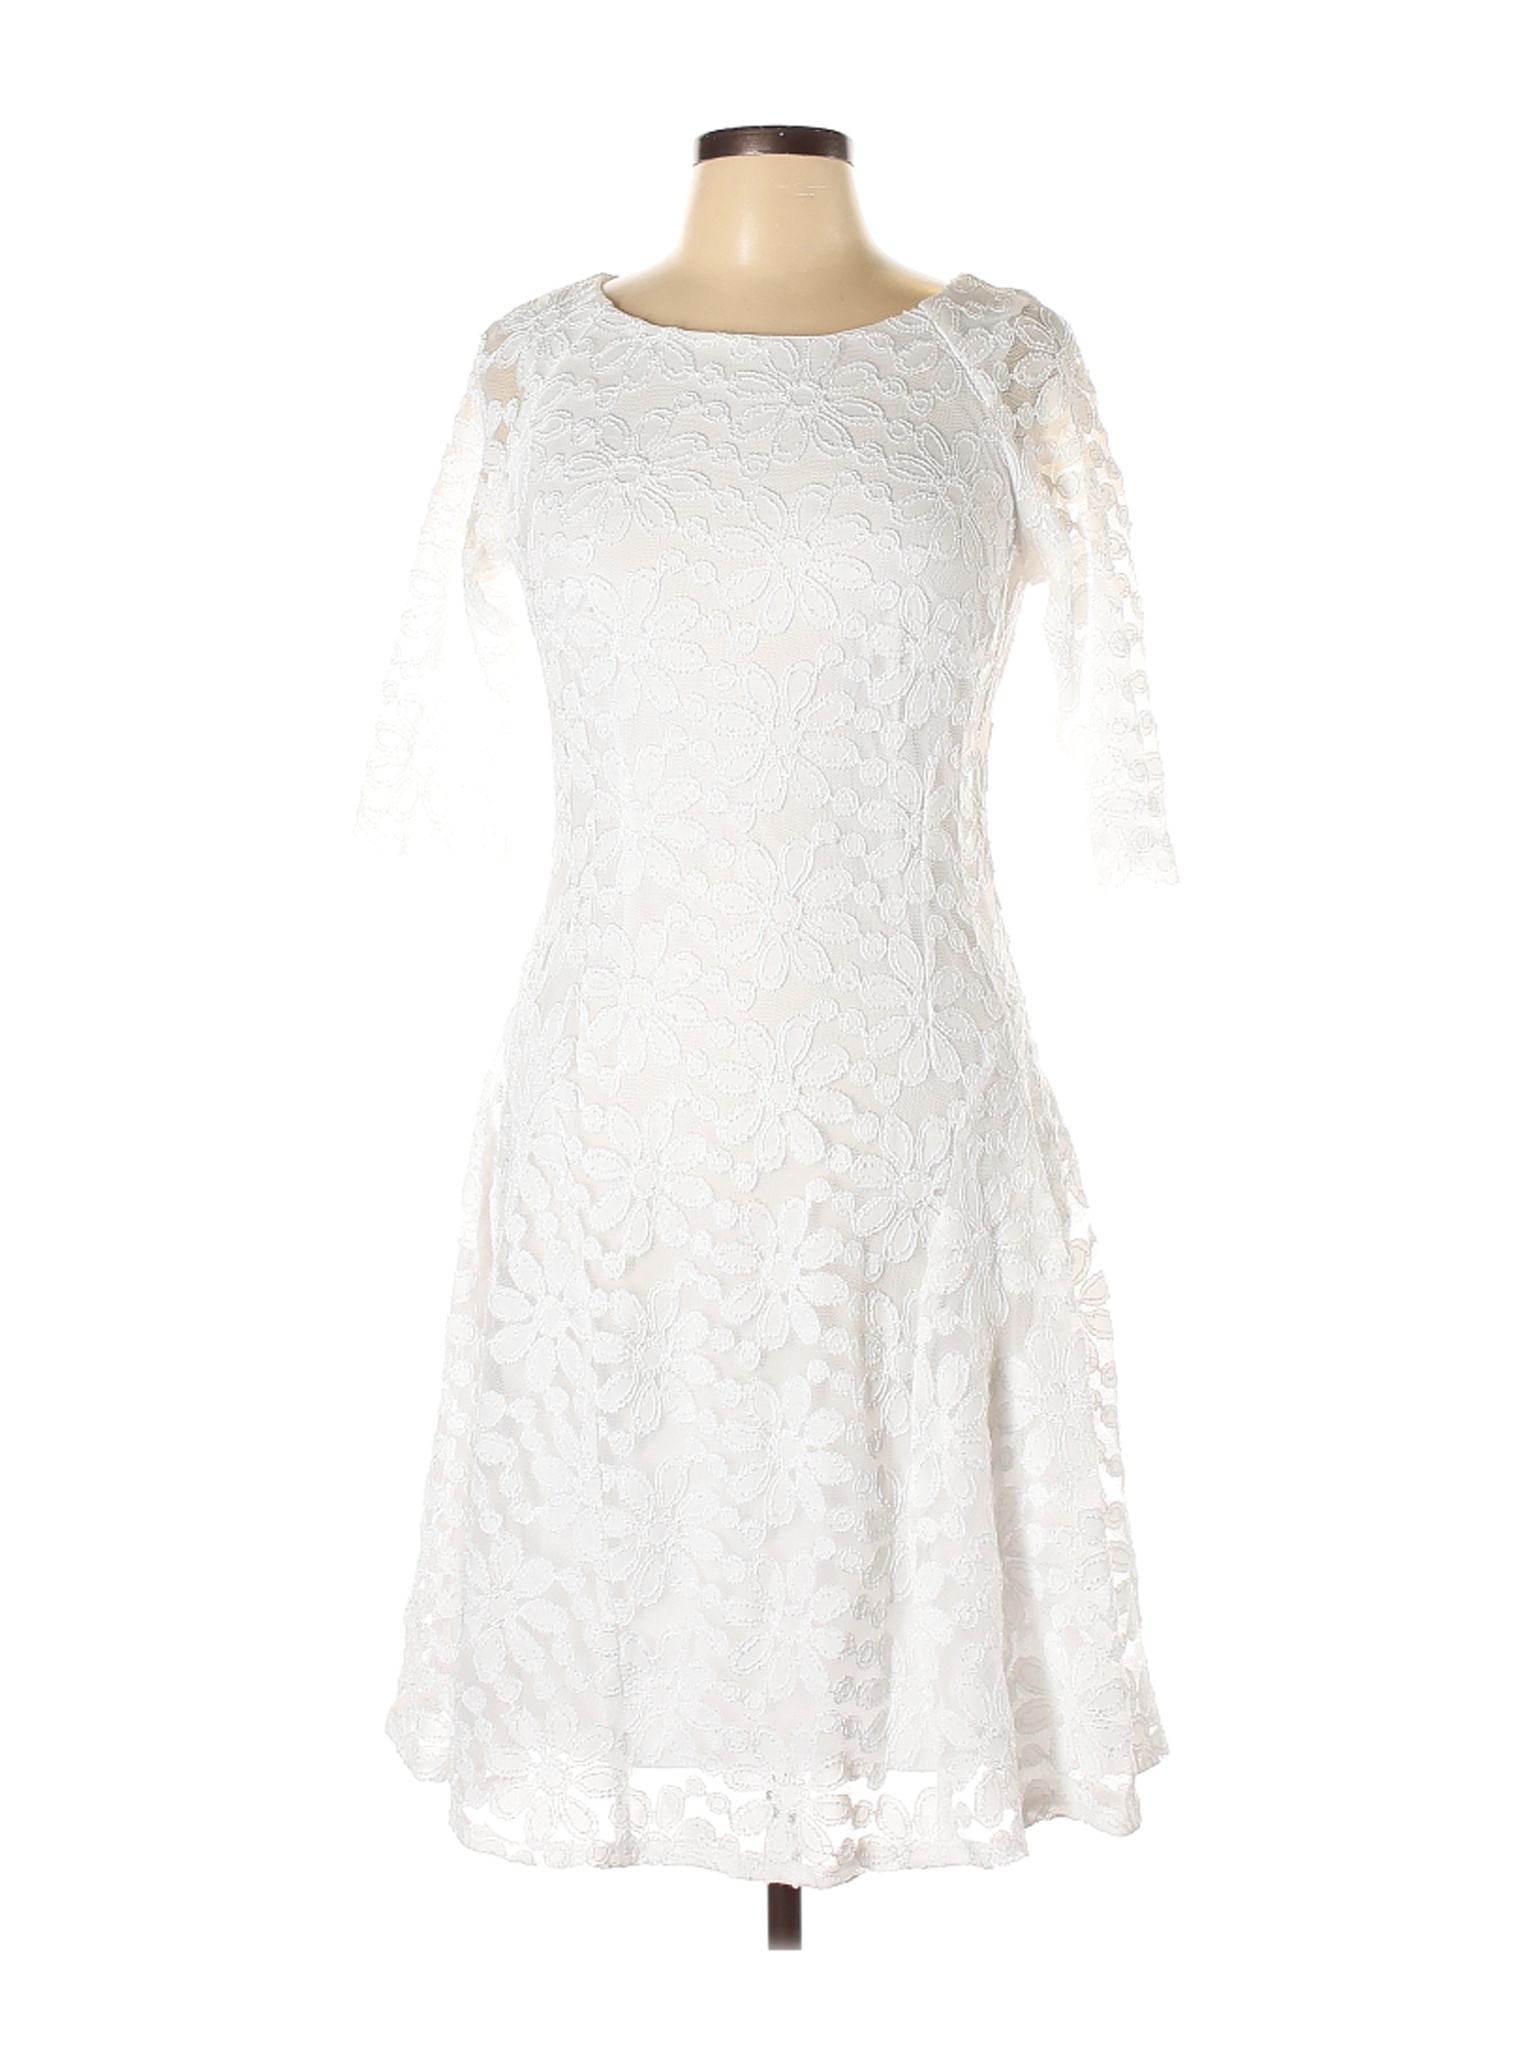 Rabbit Rabbit Rabbit Designs Women White Casual Dress 10 | eBay